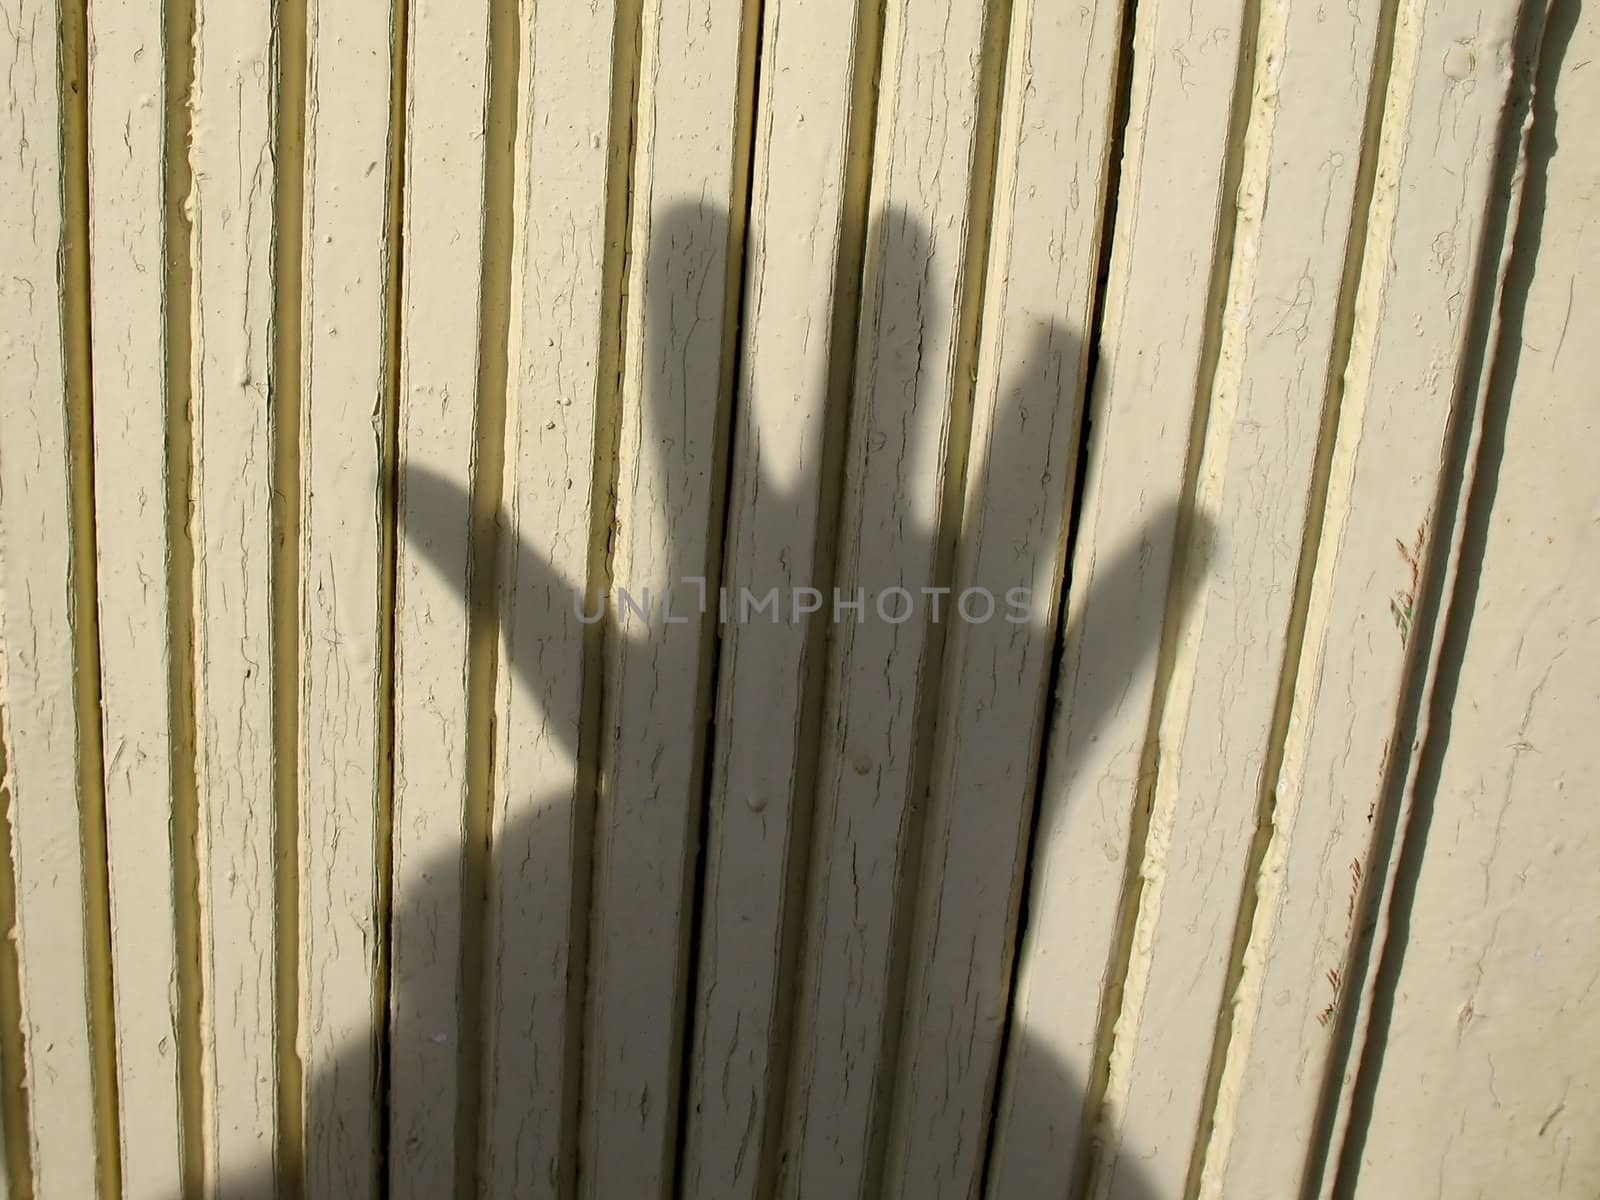 Girls hand`s shadow on wood wall.